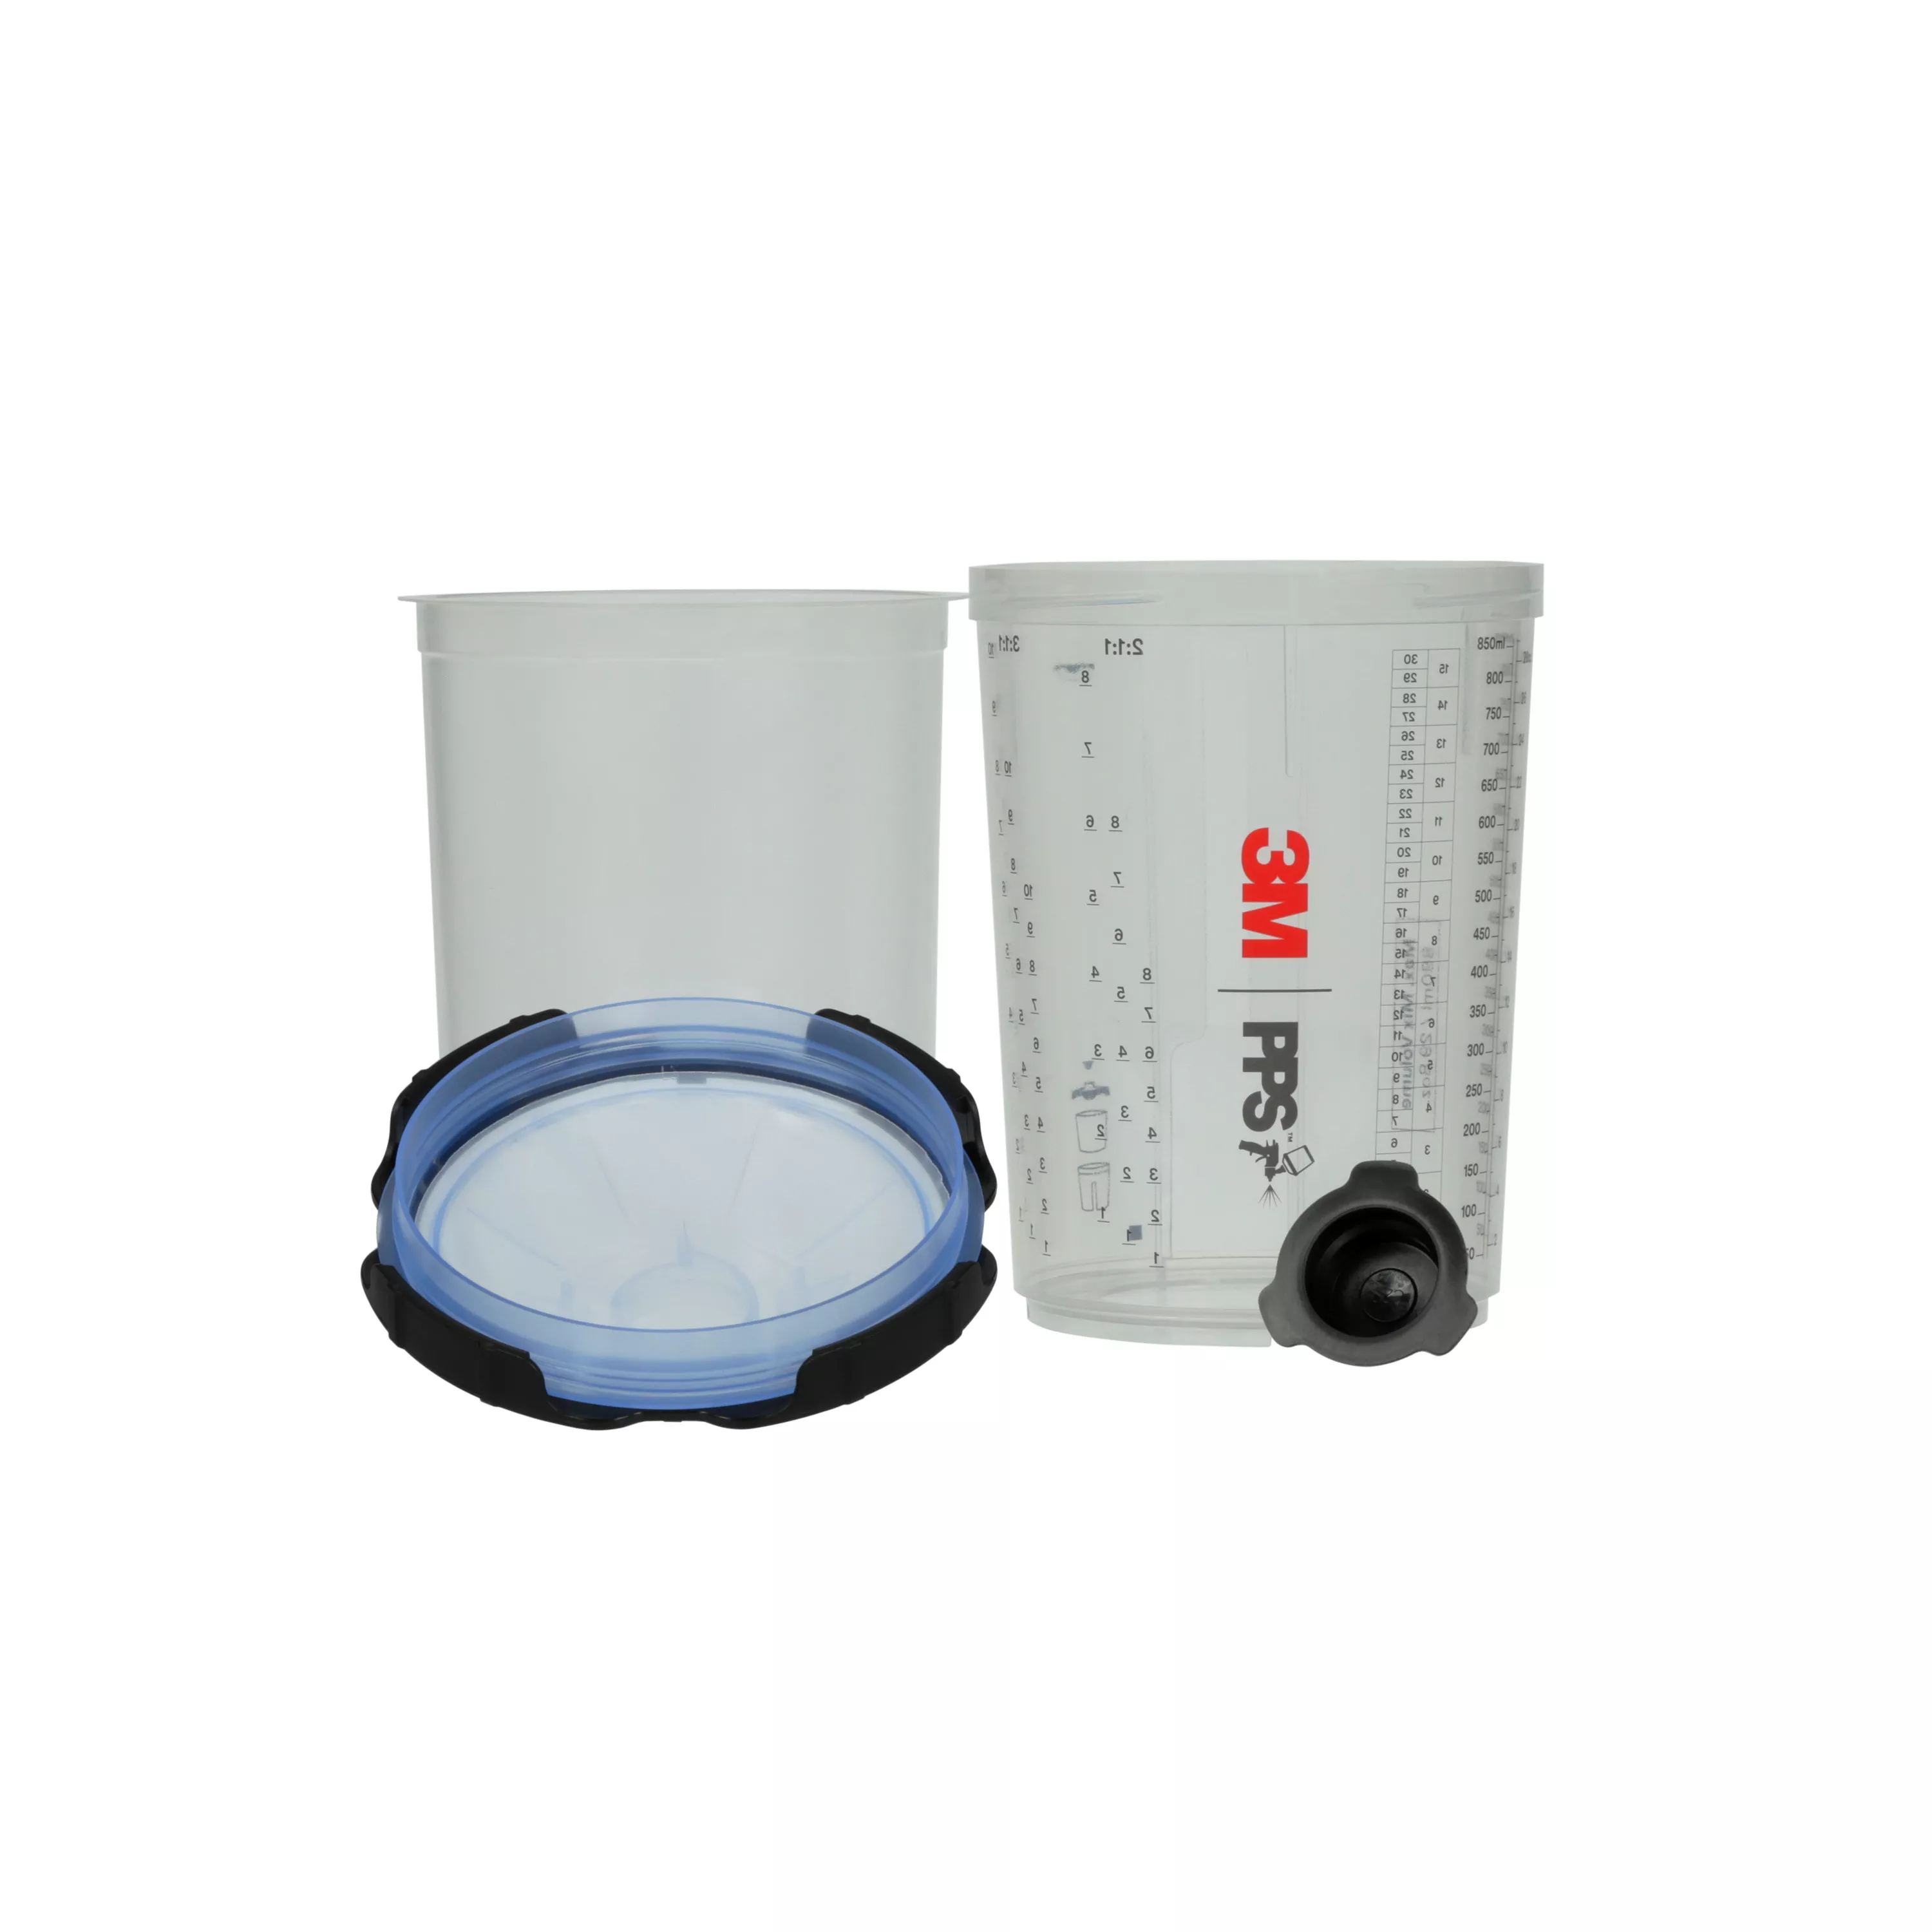 3M™ PPS™ Series 2.0 Spray Cup System Kit 26325, Large (28 fl oz, 850
mL), 125 Micron Filter, 1 Kit/Case